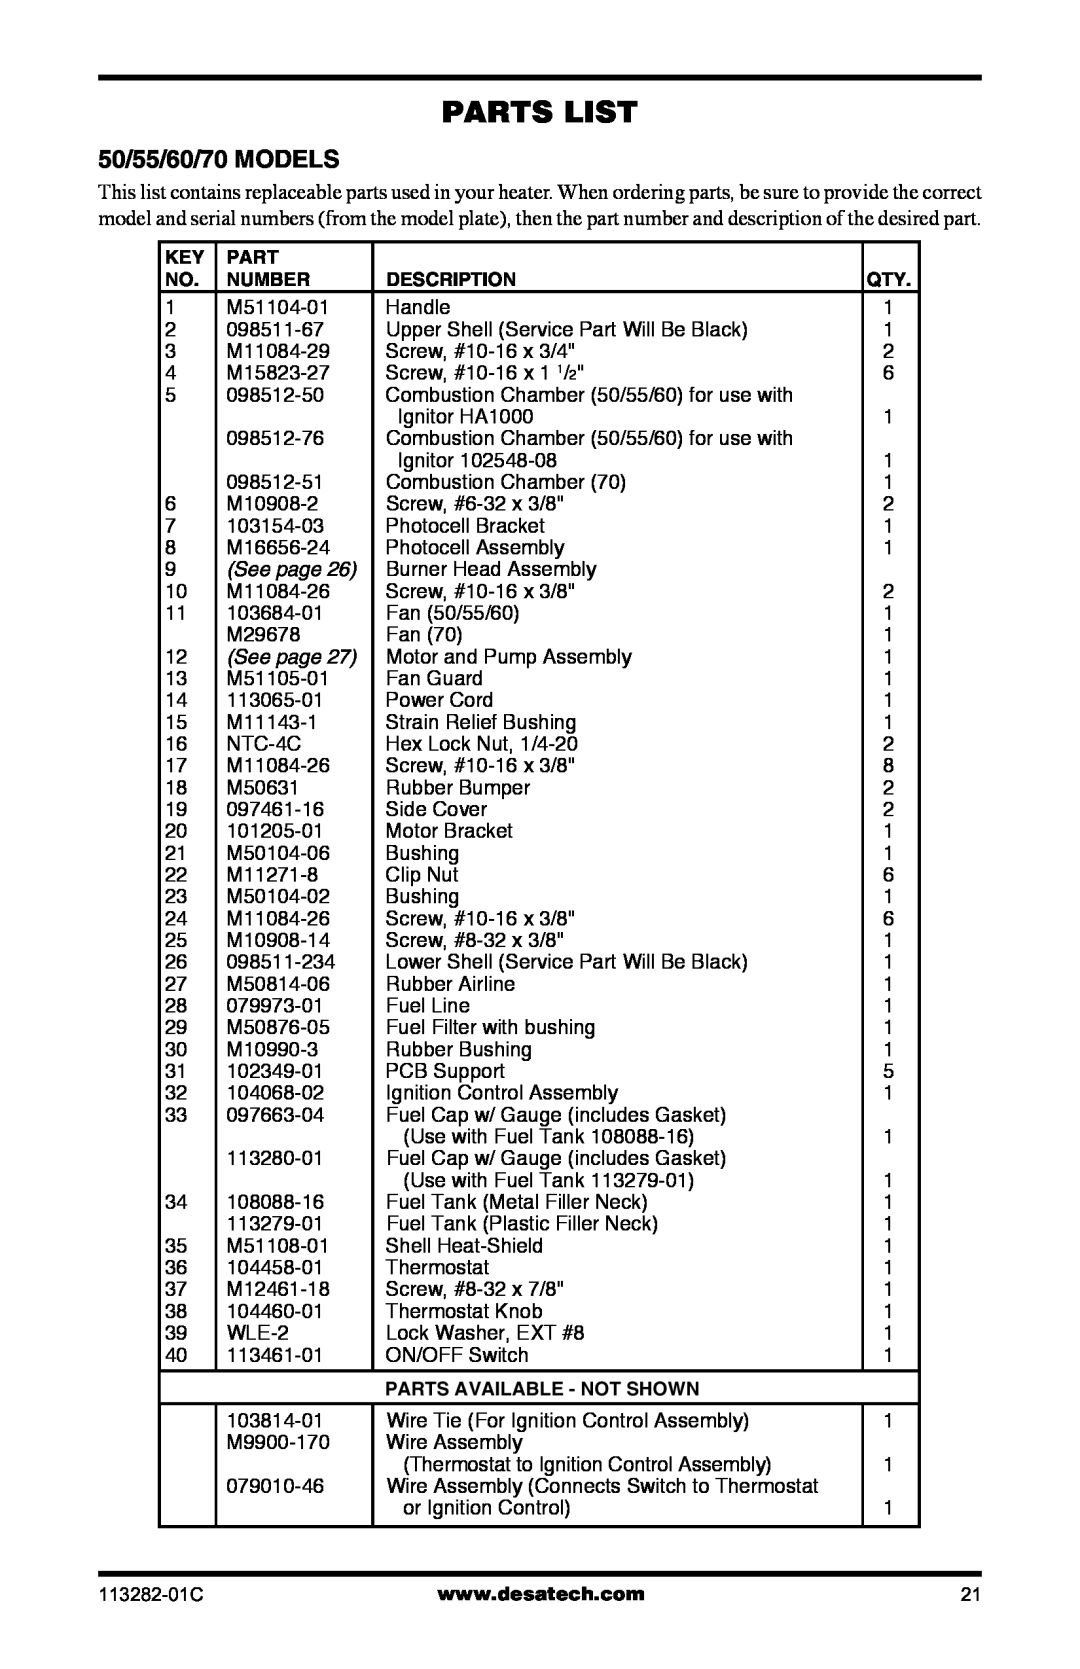 Desa BTU/HR owner manual Parts List, 50/55/60/70 MODELS, See page 